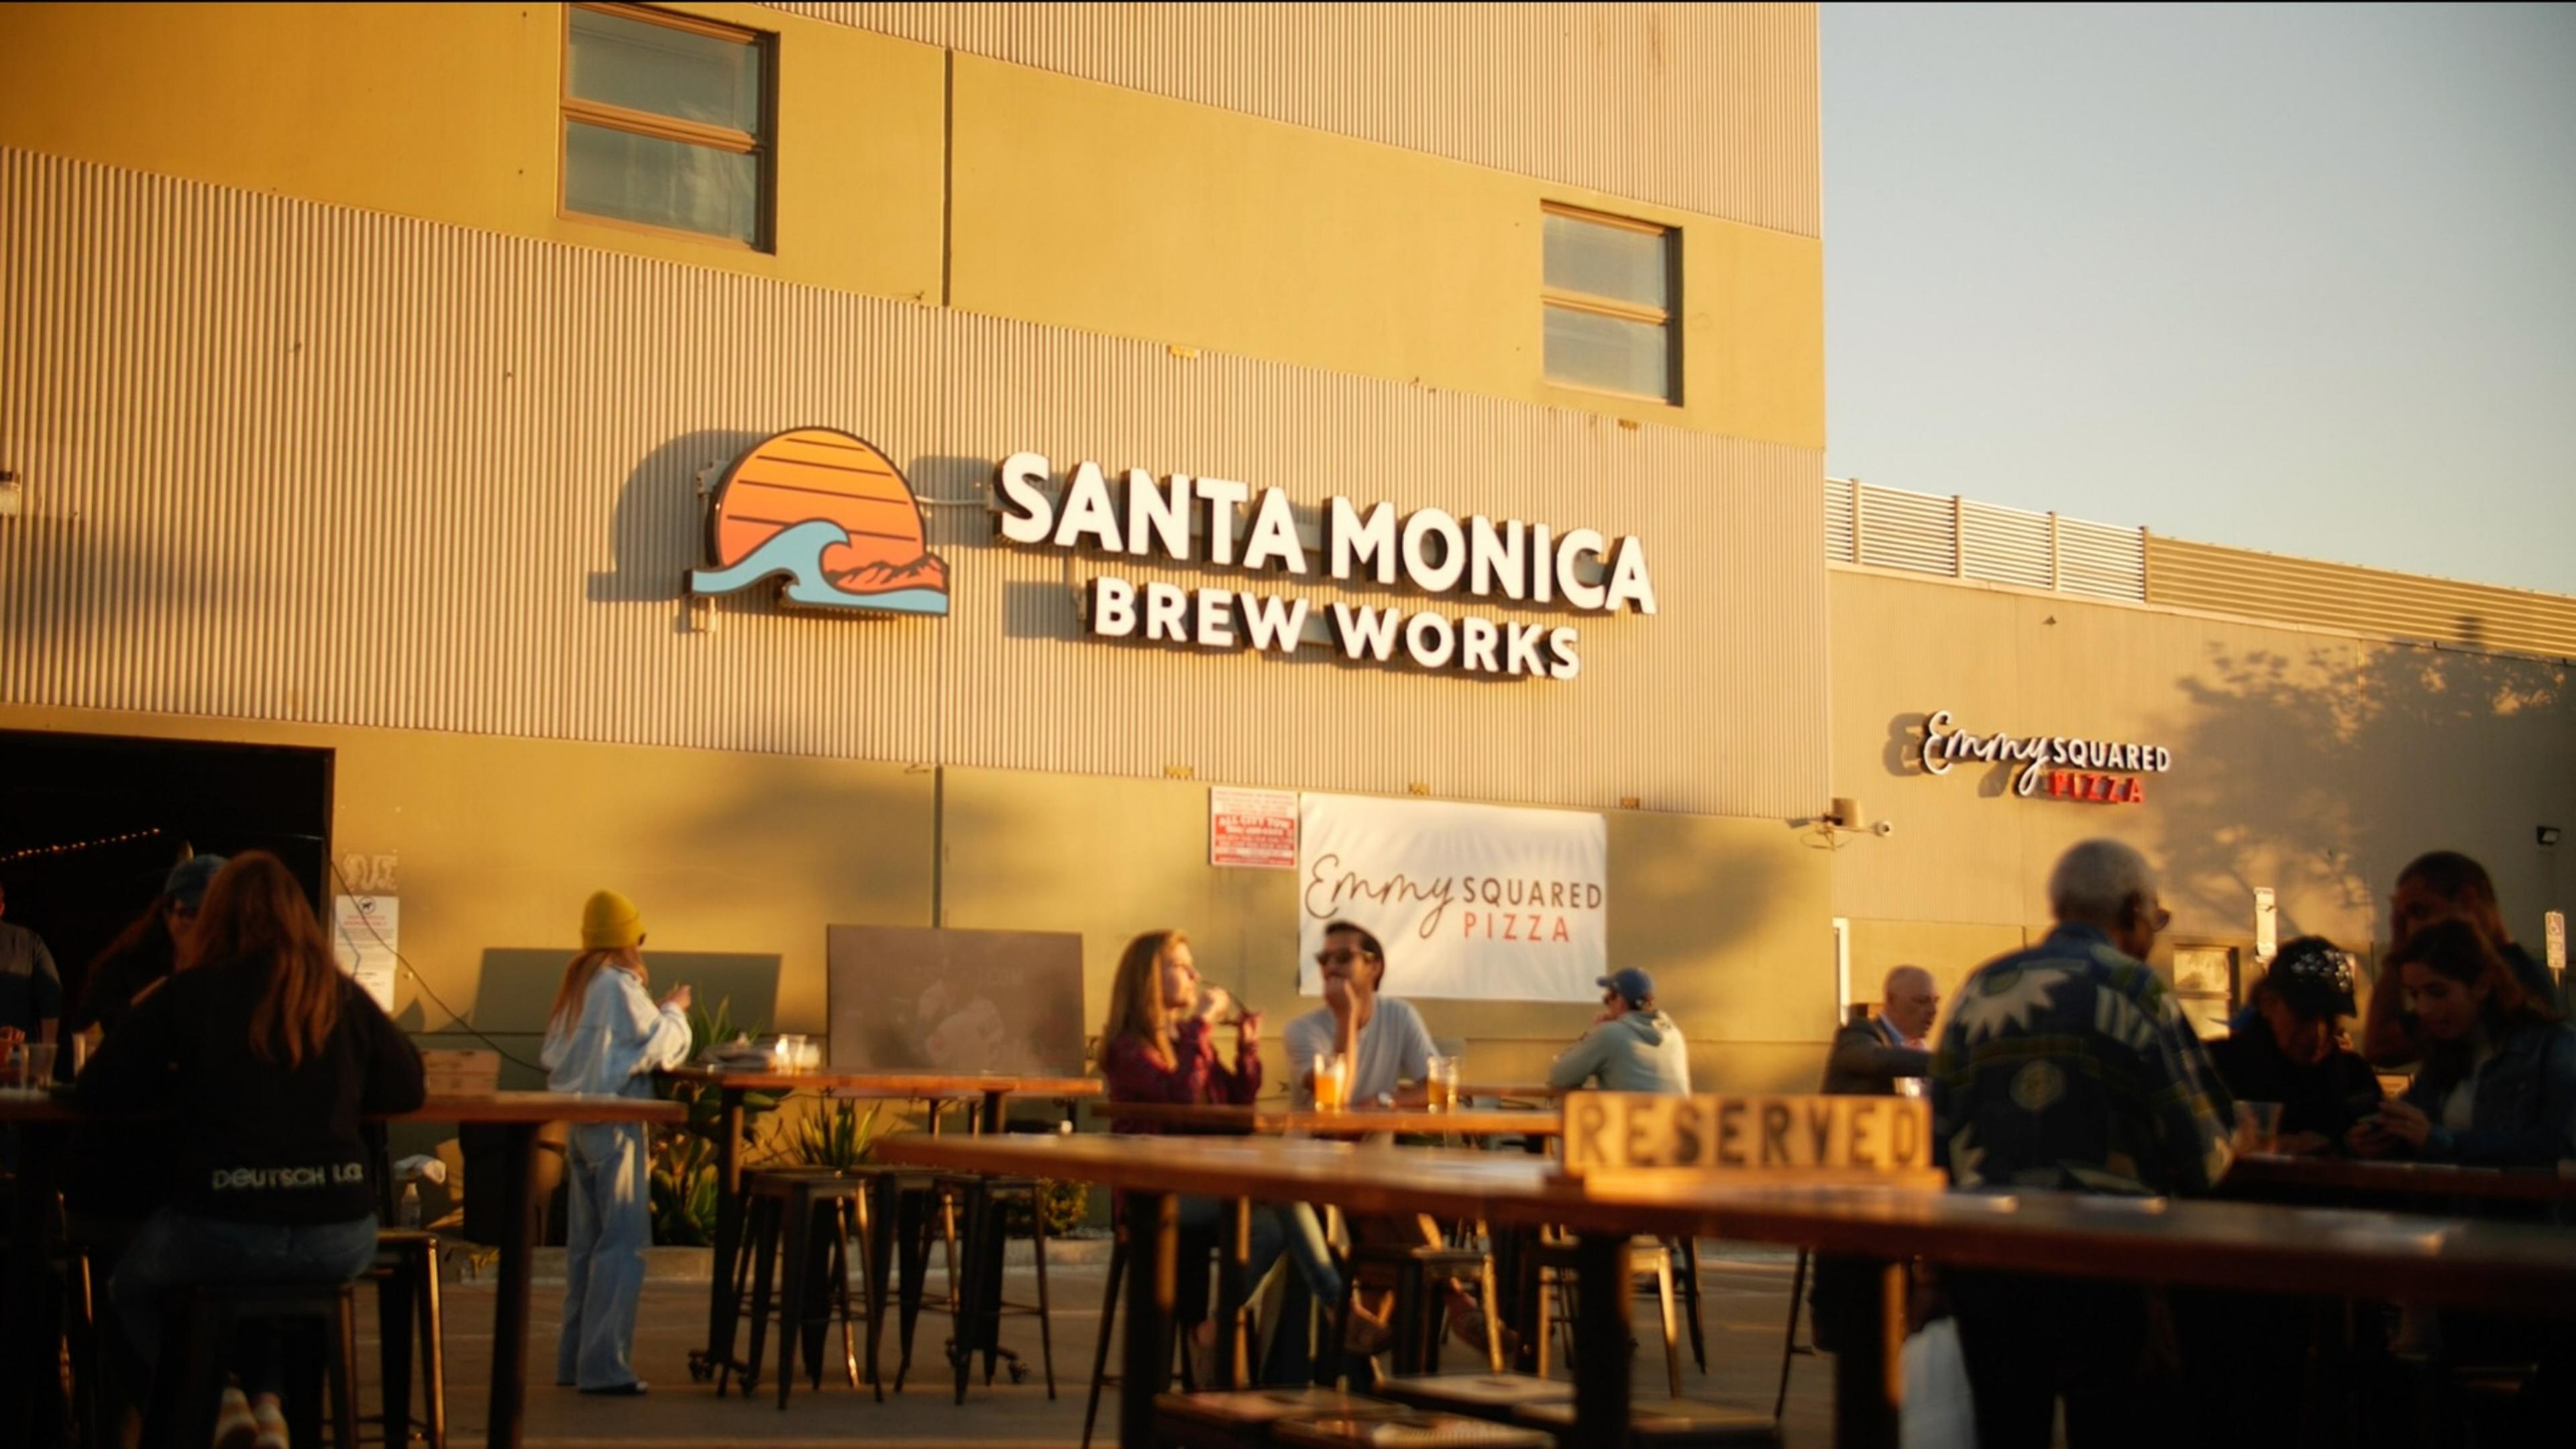 Emmy Squared - Santa Monica Brew Works